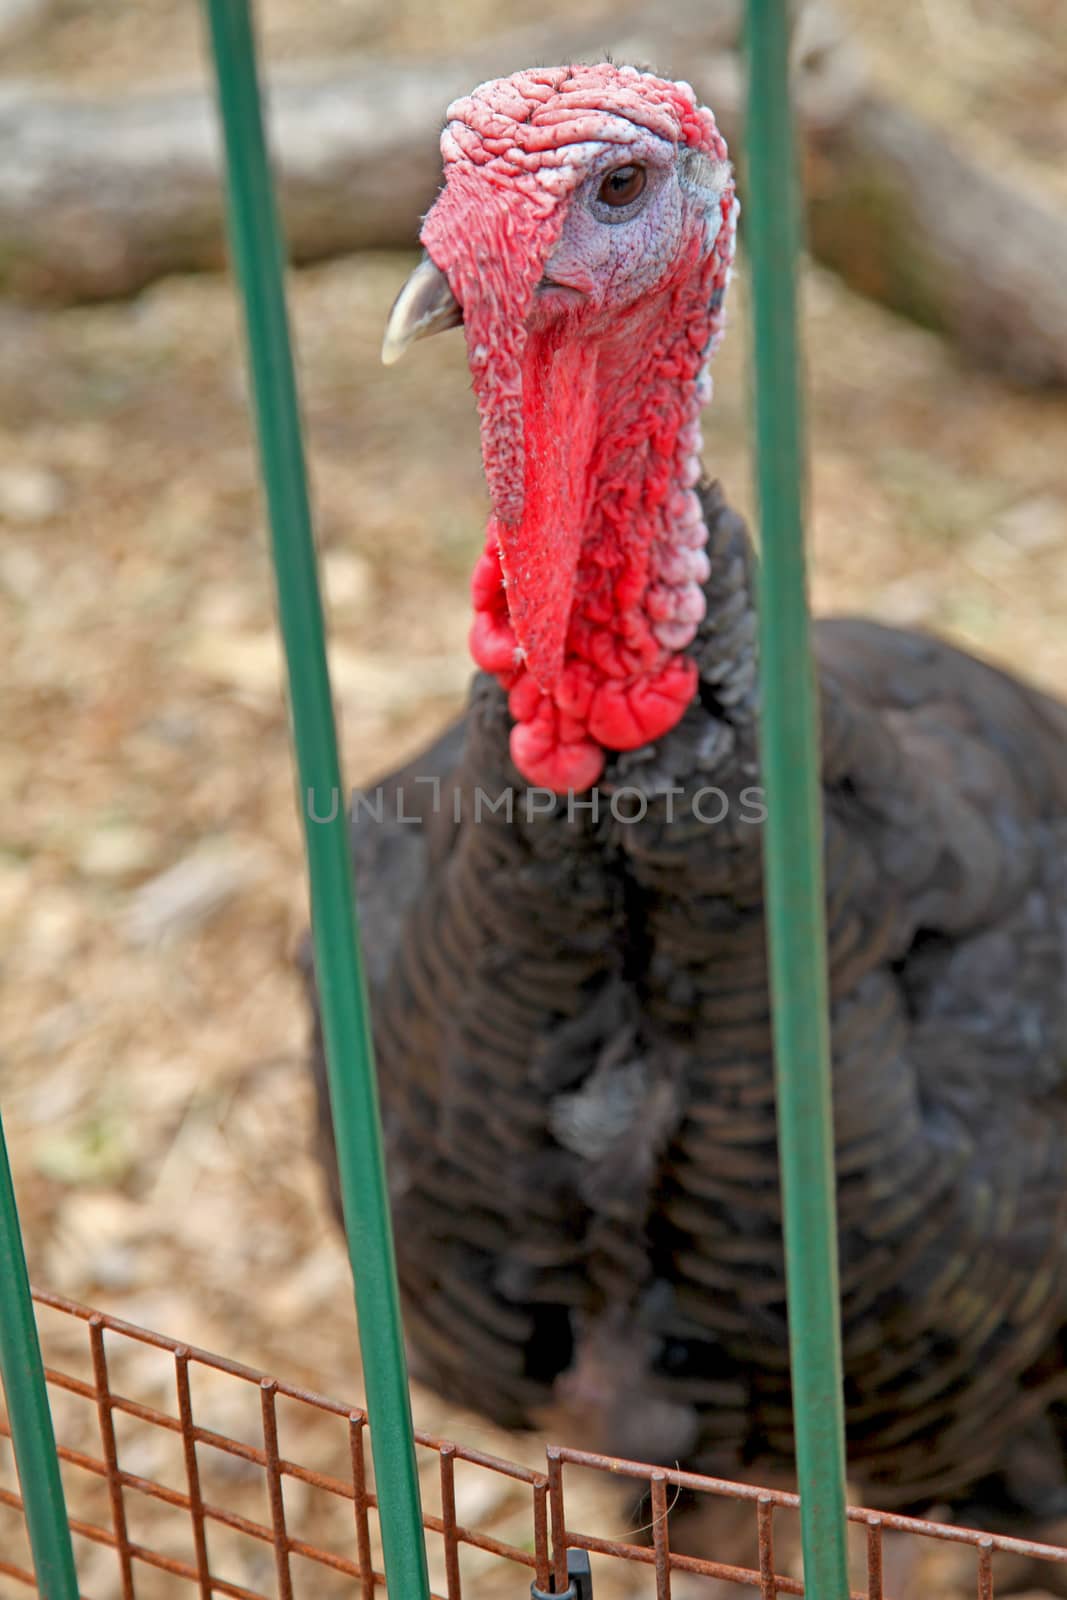 A bird, a turkey behind some bars